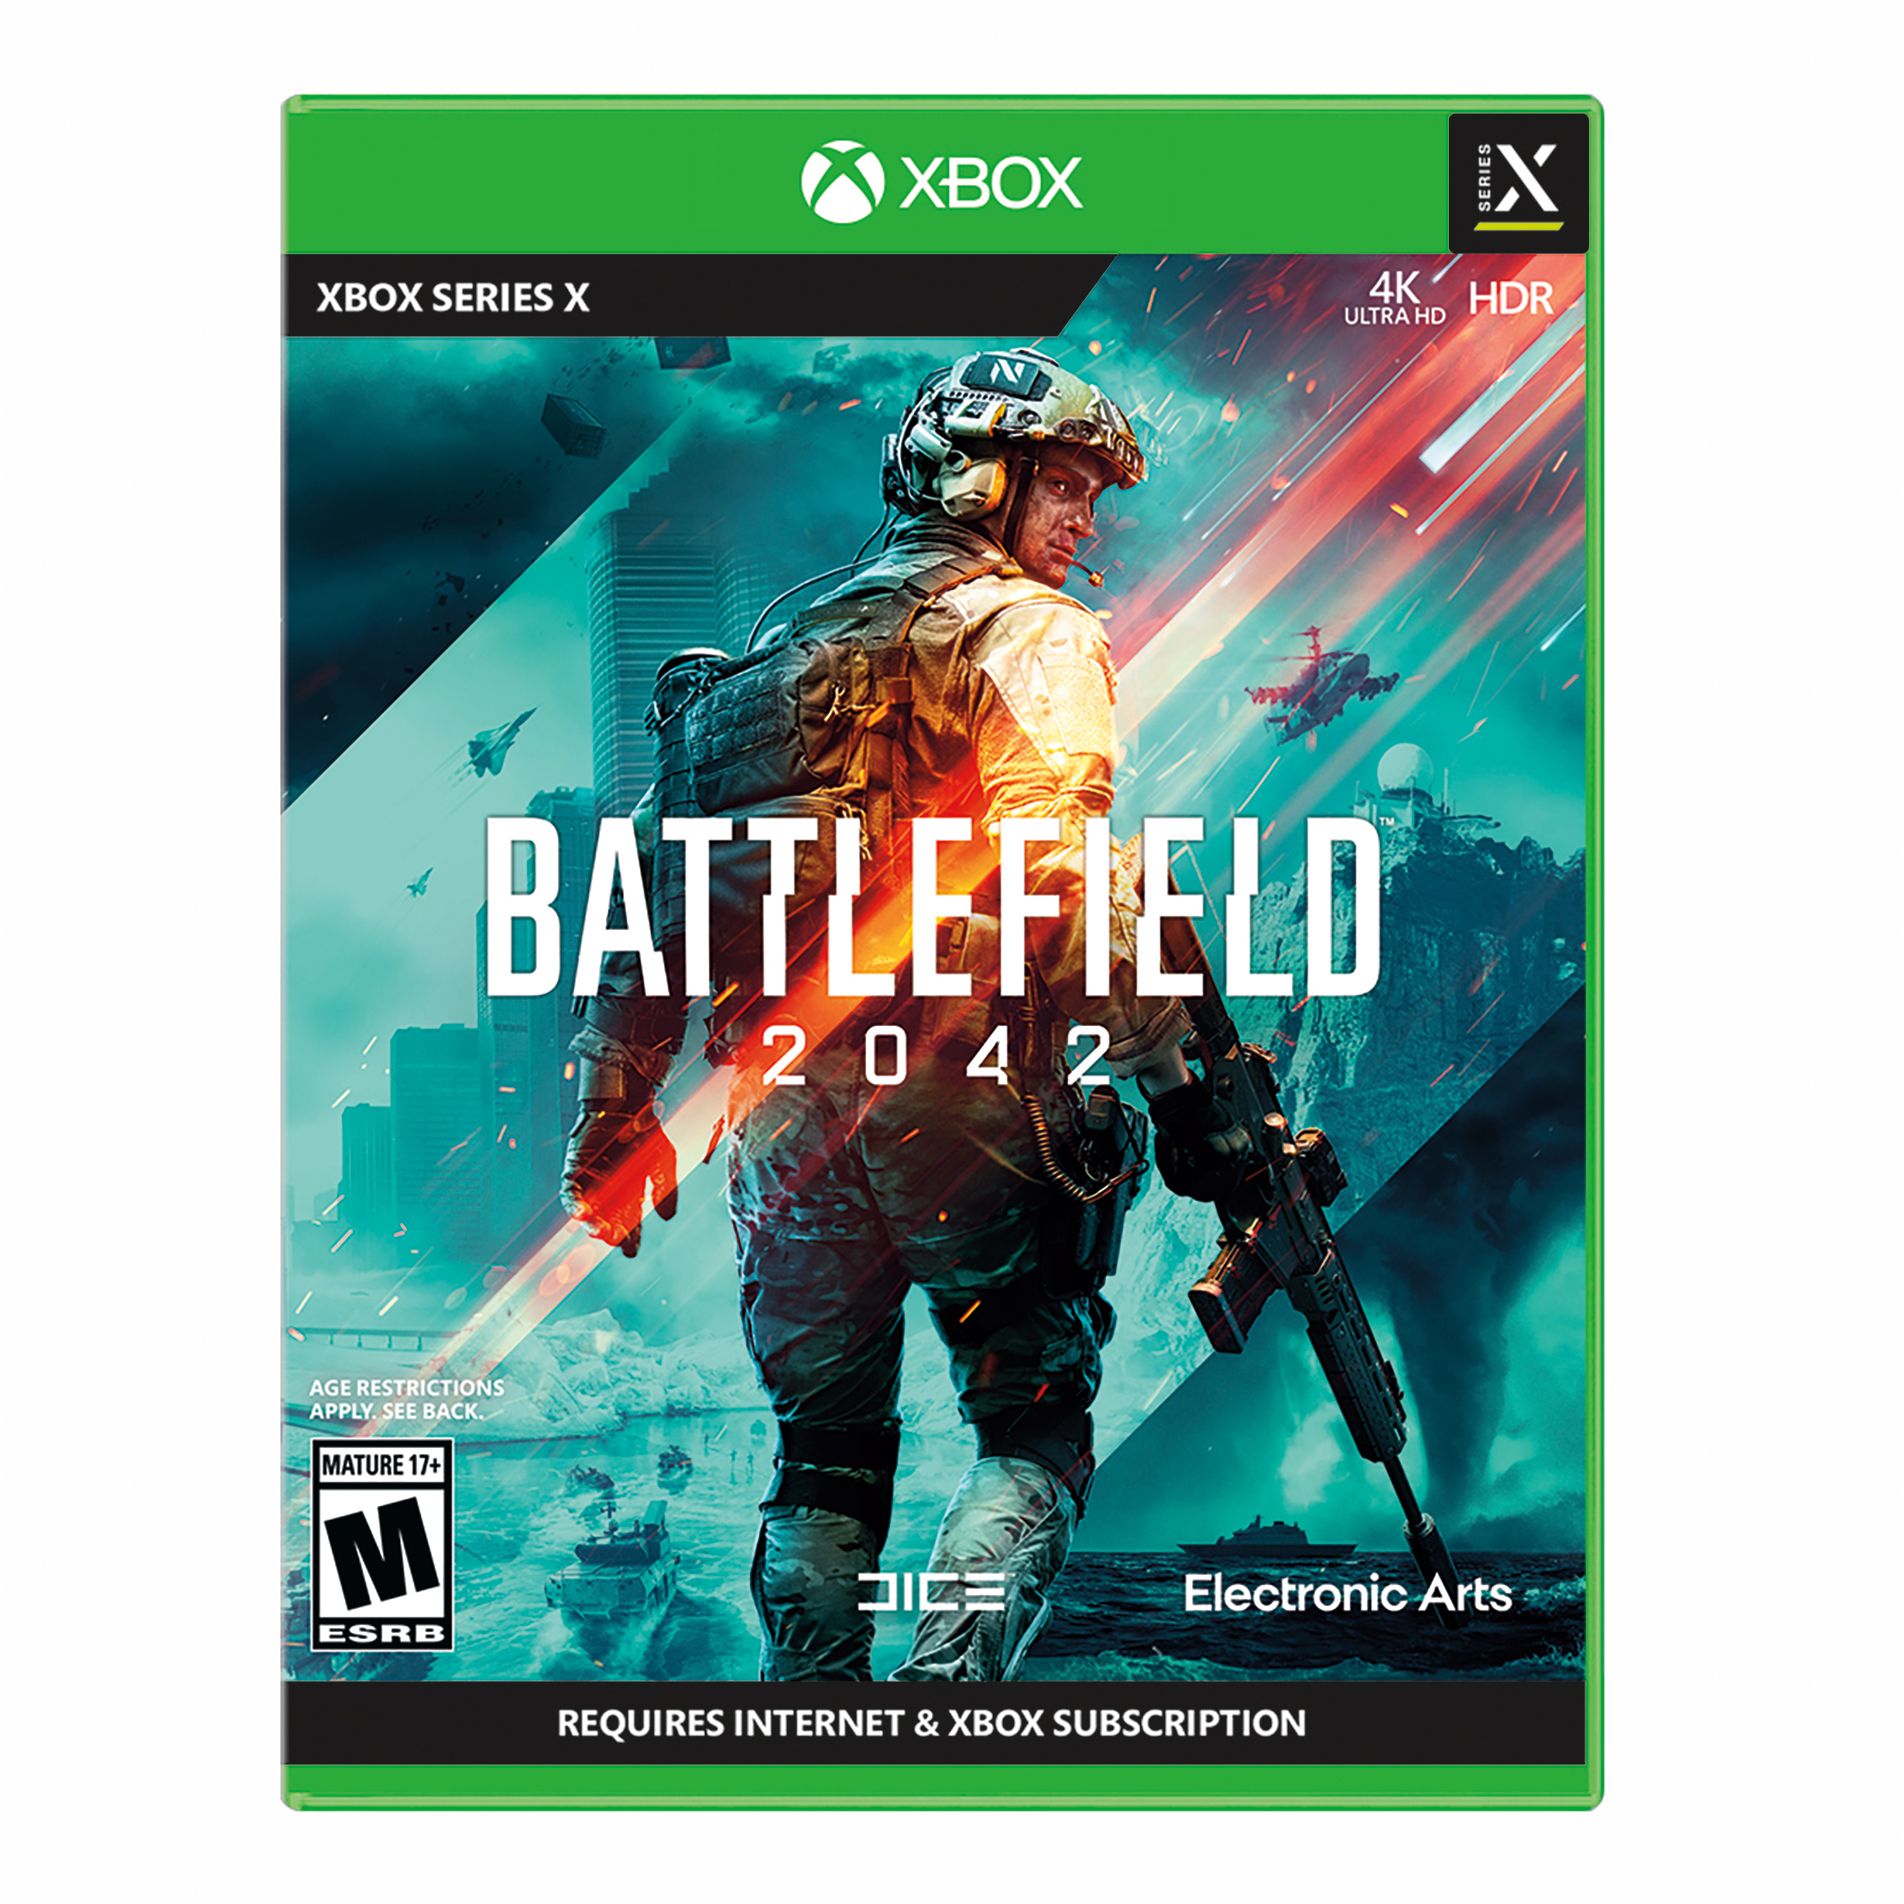 Battlefield 2042 (XBOX SERIES X) FREE SAME DAY SHIPPING! 4K ULTRA HD, HDR